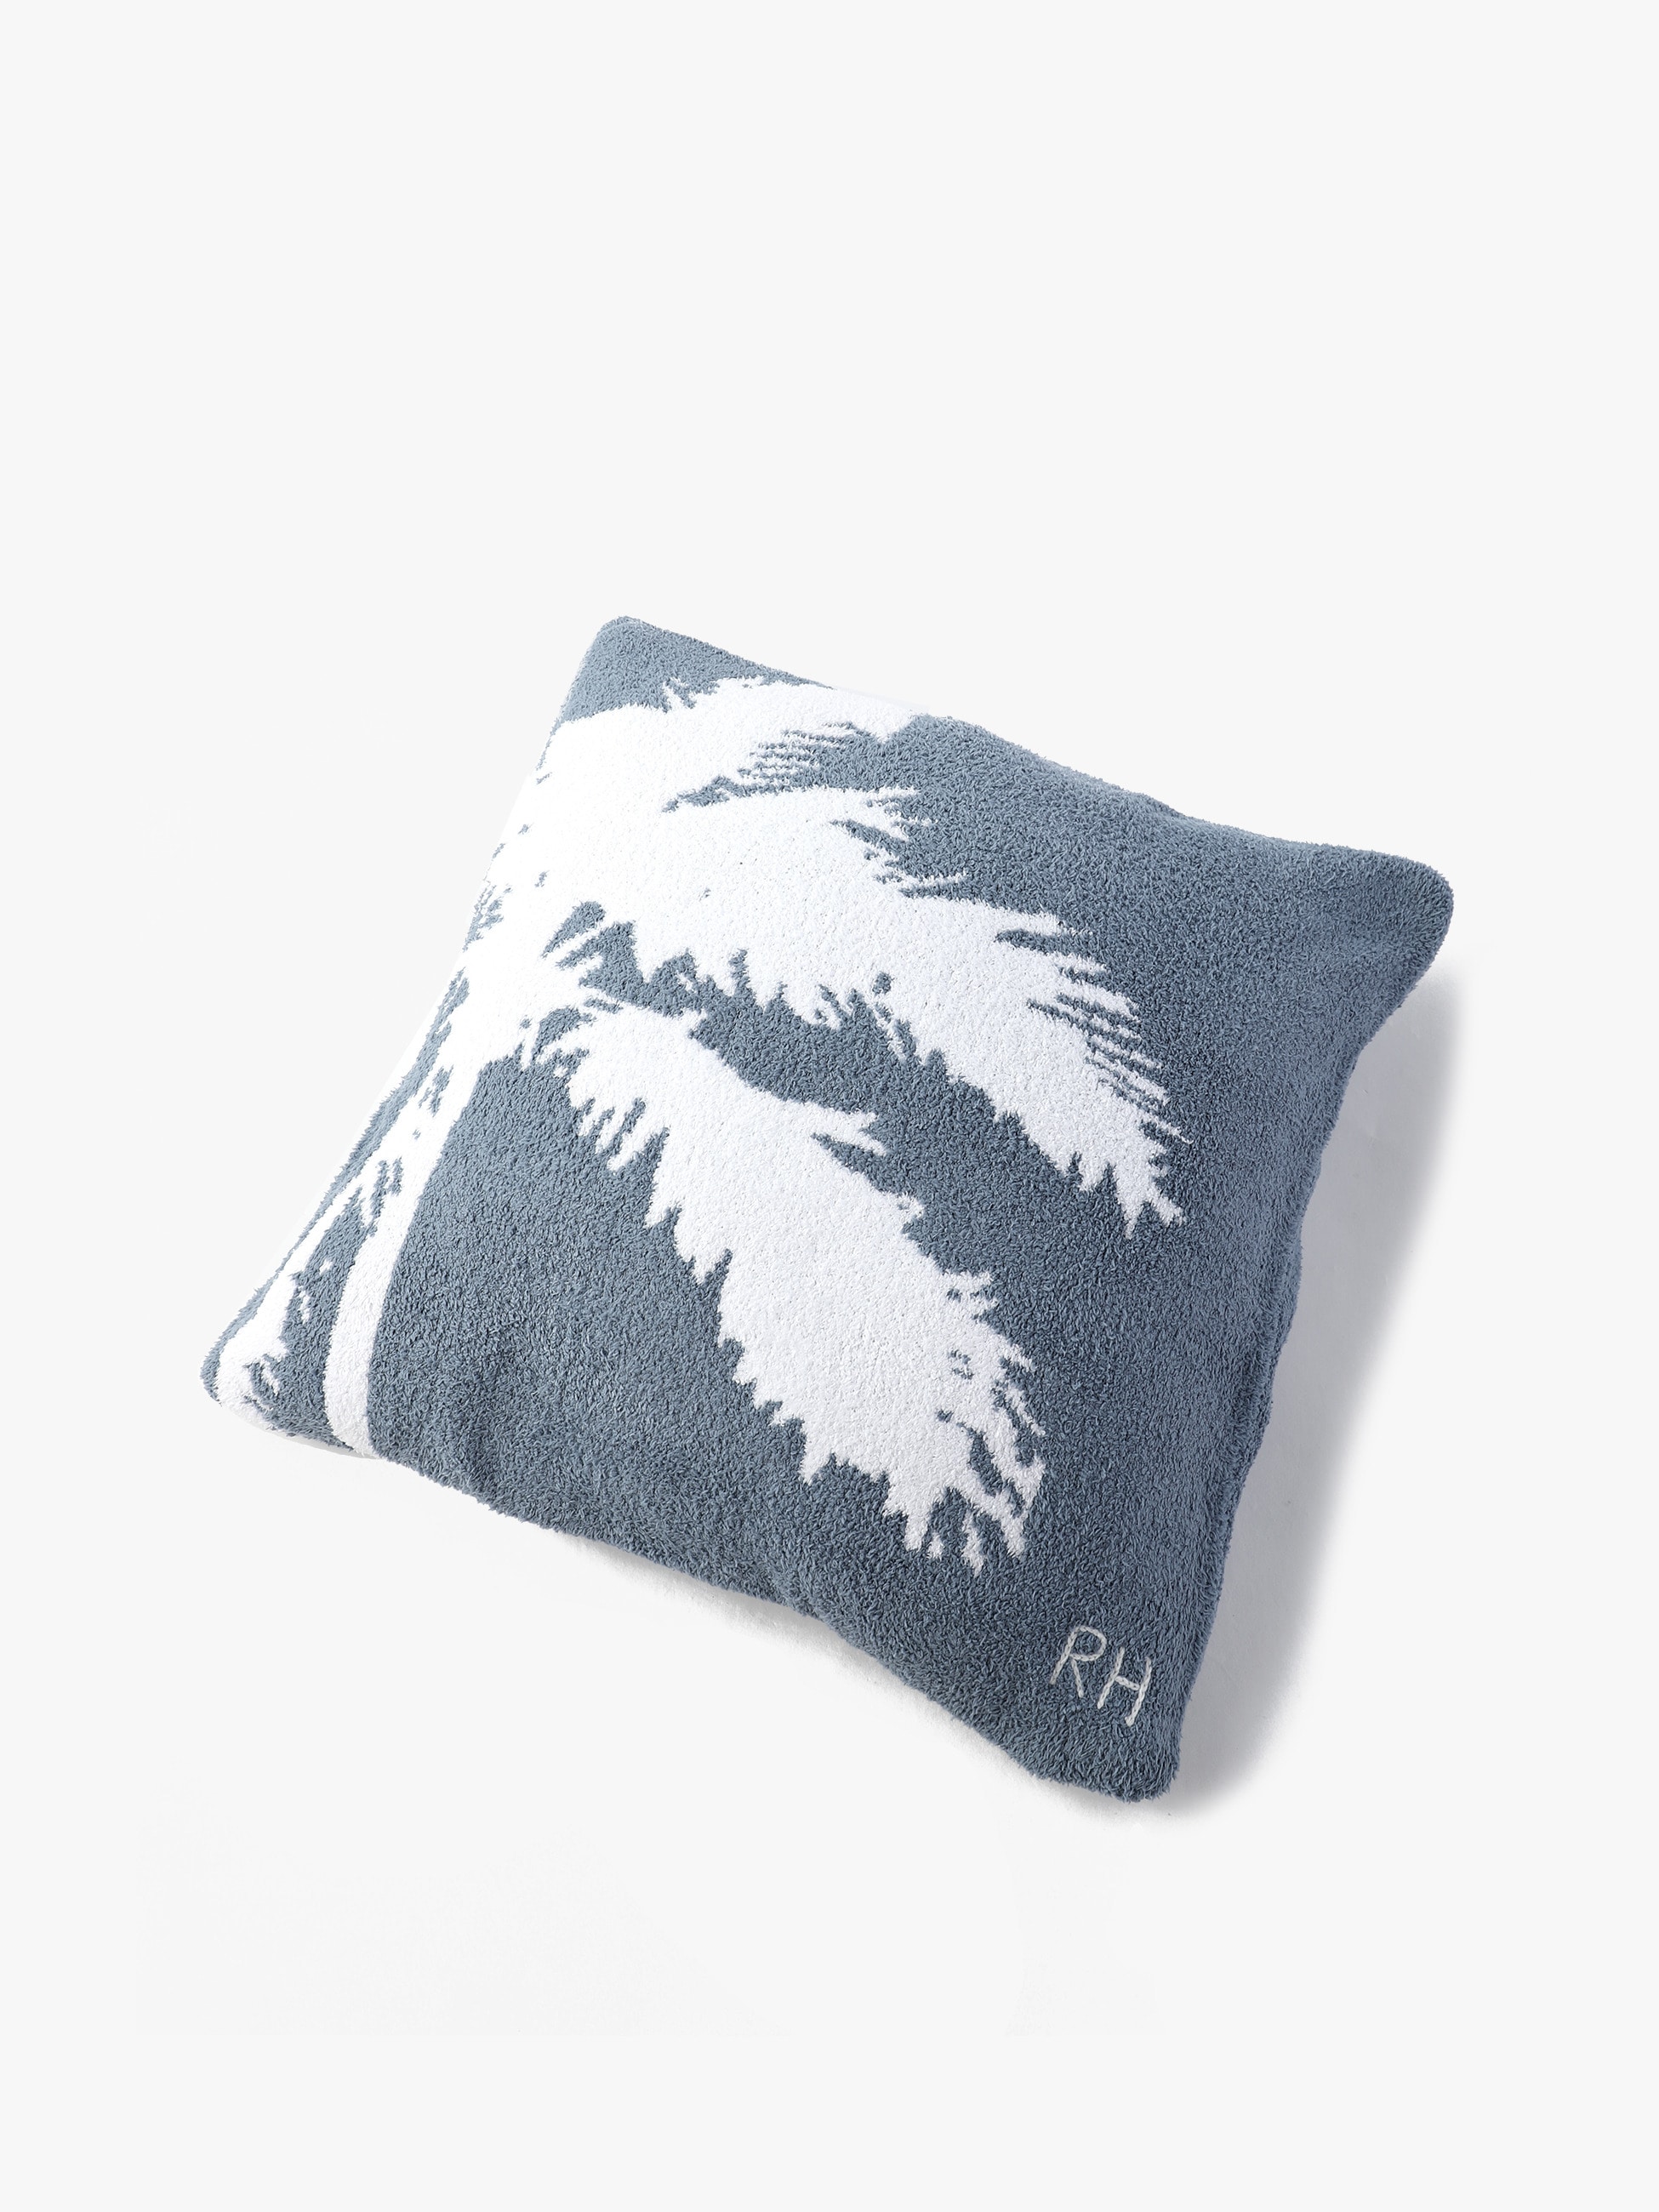 Palm Tree Pillow